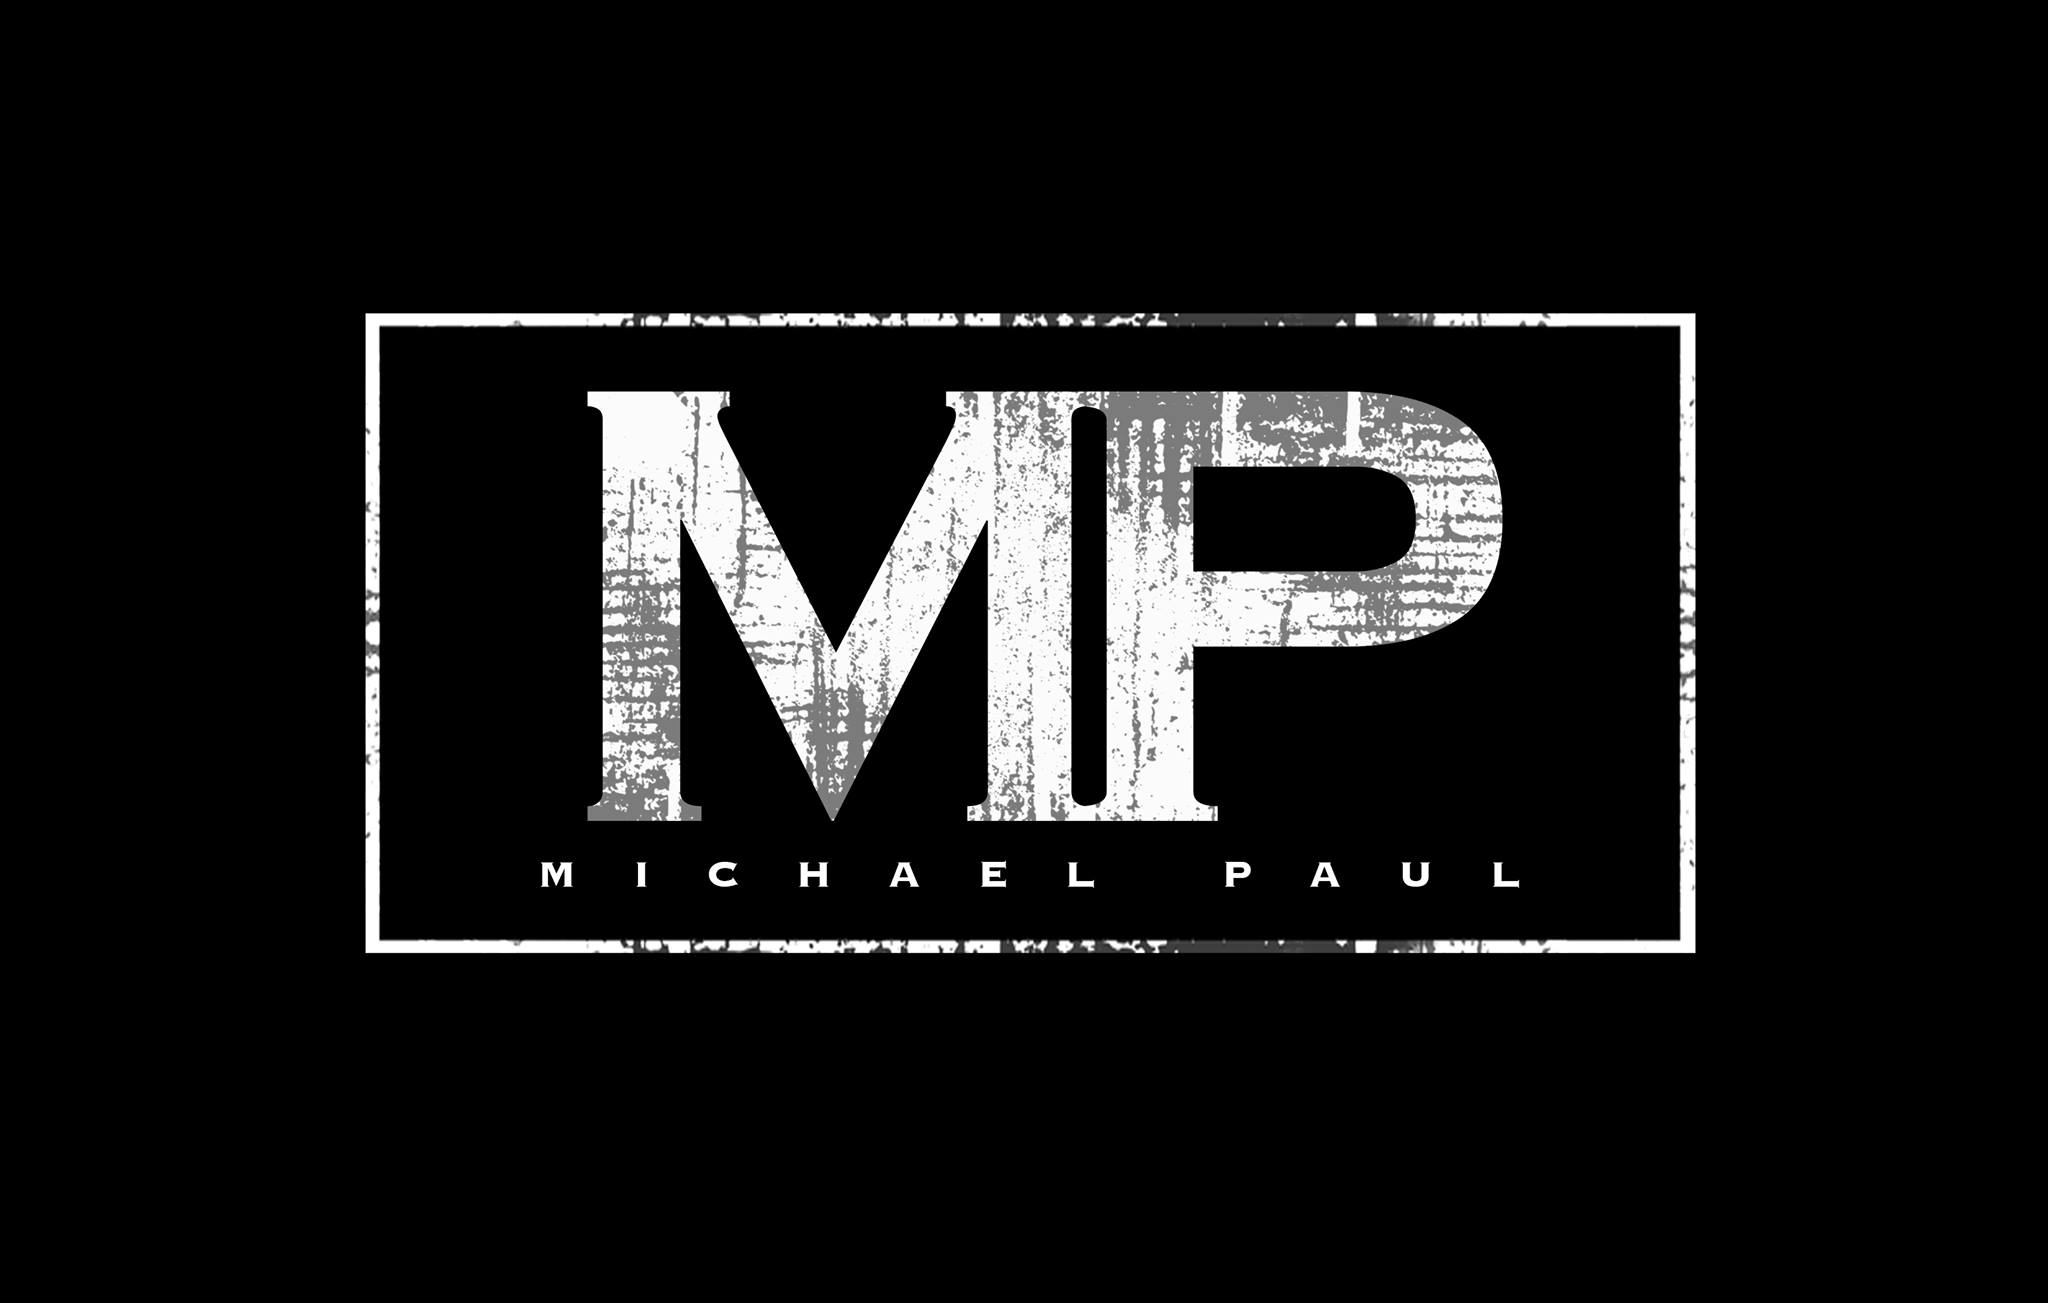 Michael “MP” Paul
